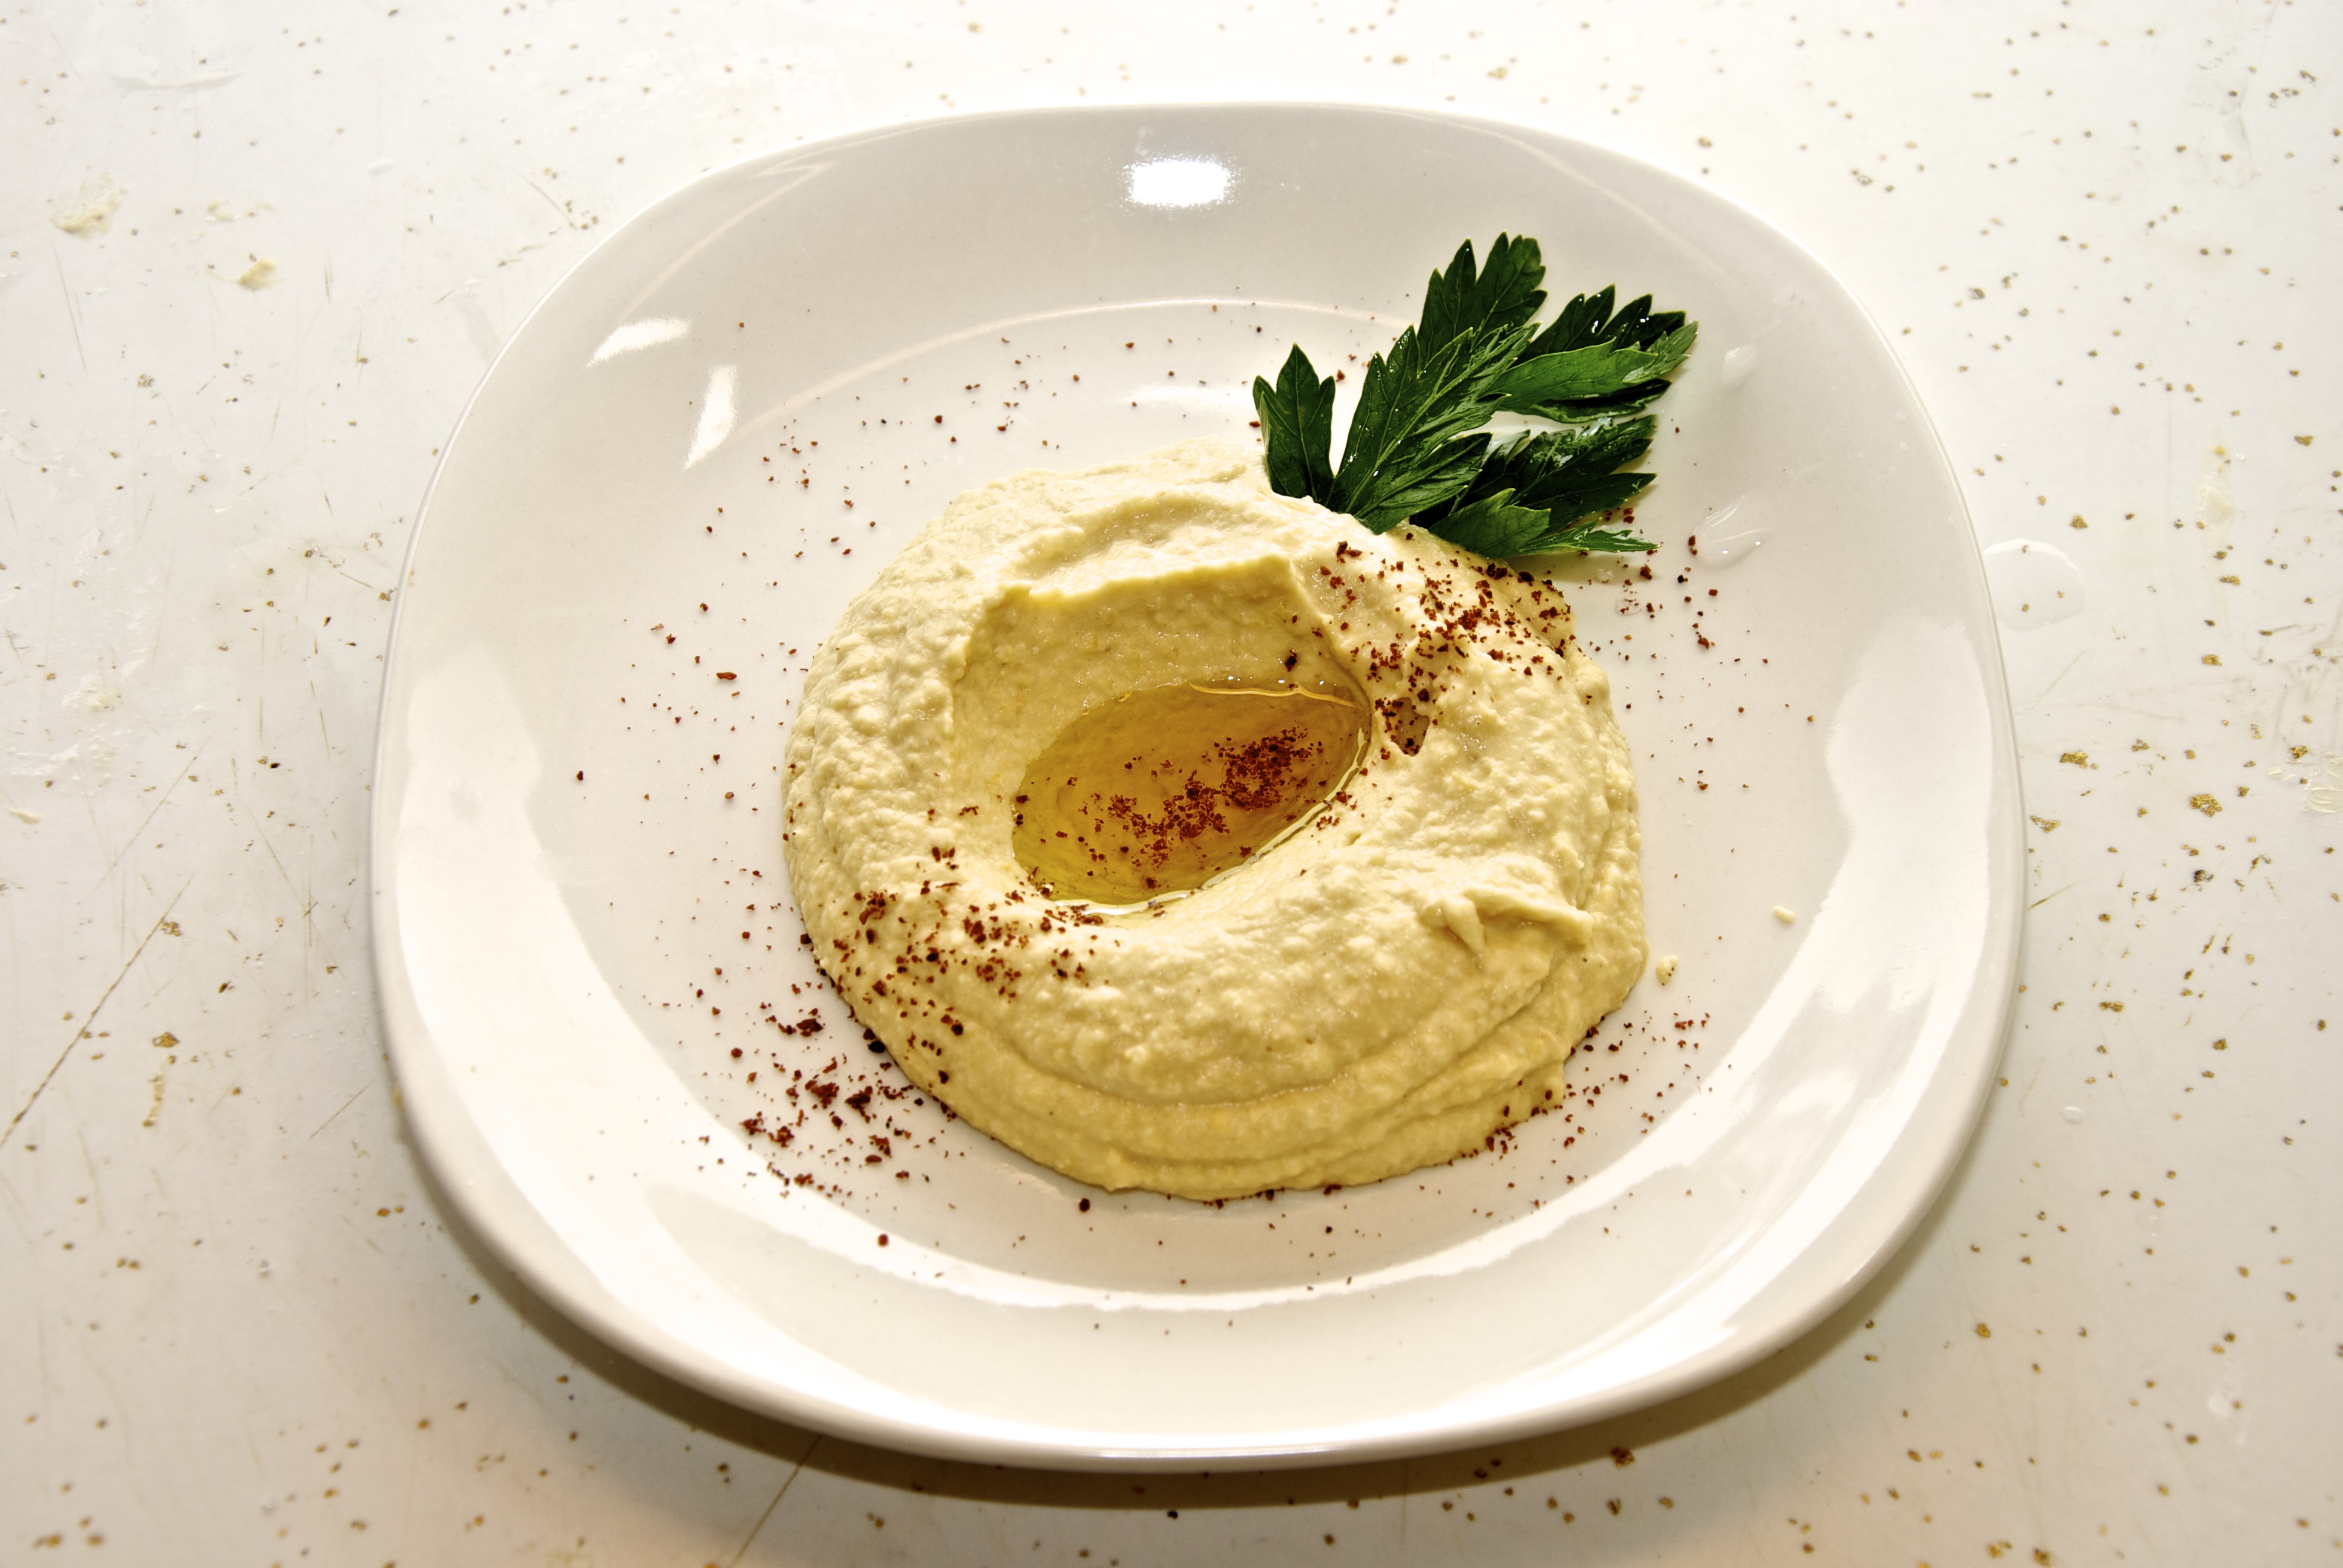 The Greek Adopted Dish: Hummus